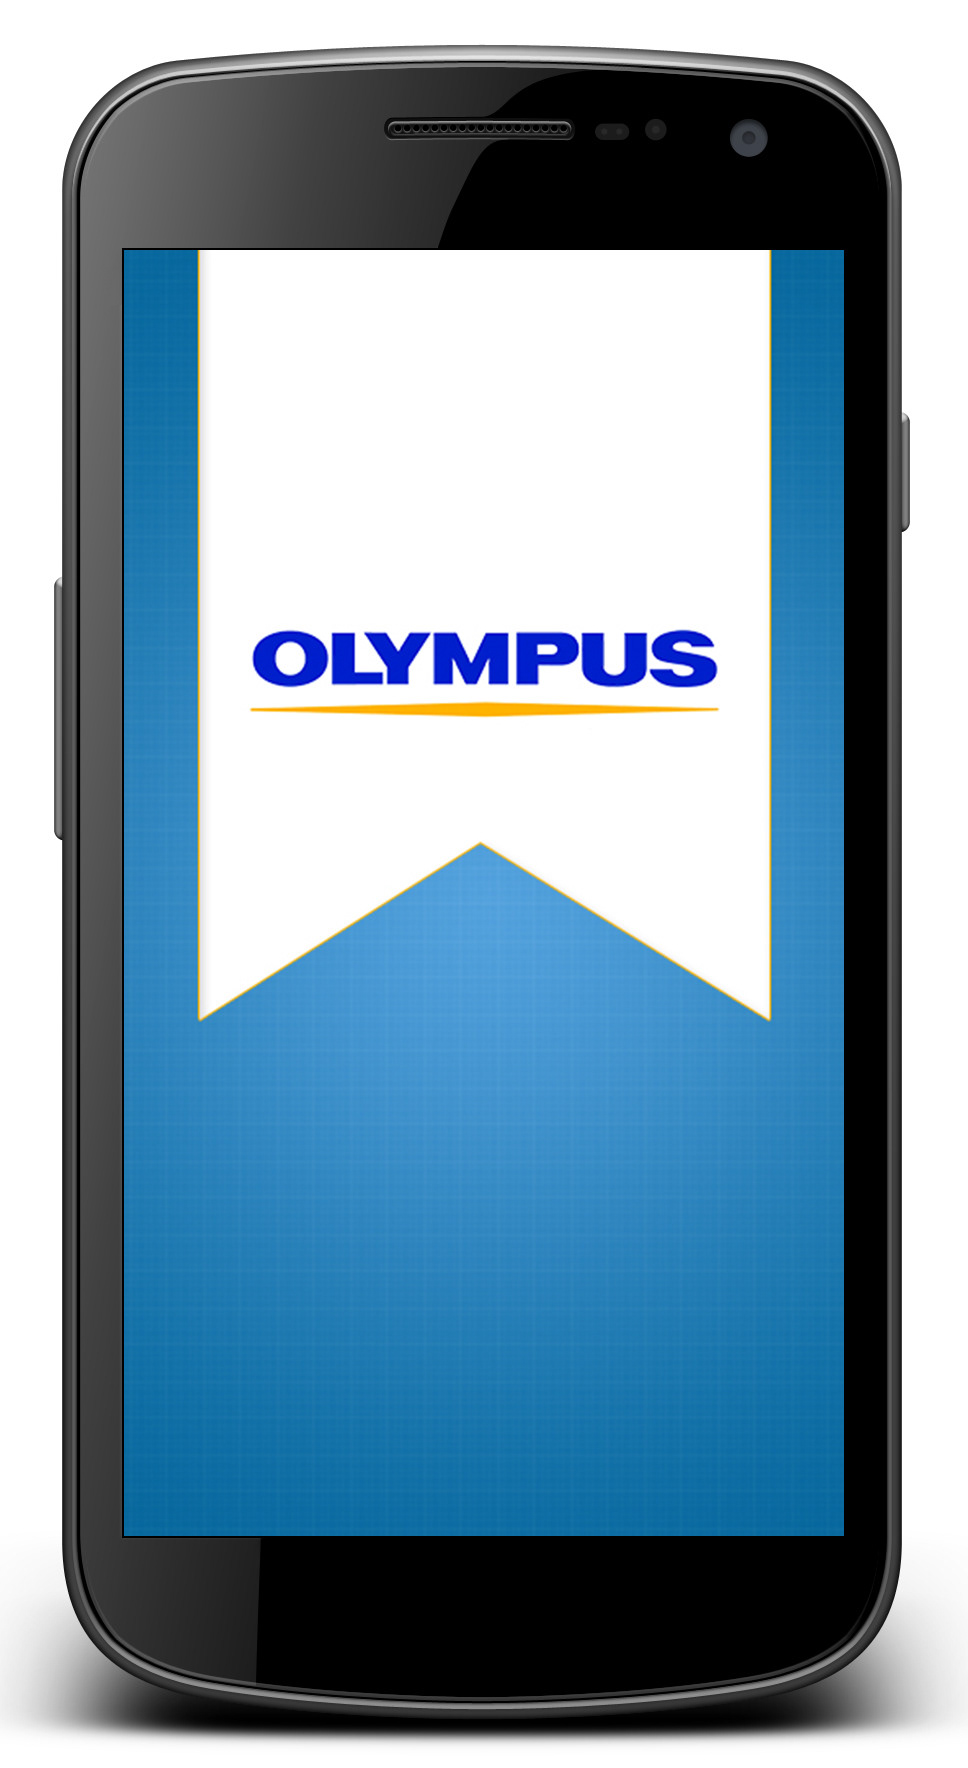 Olympus Application design